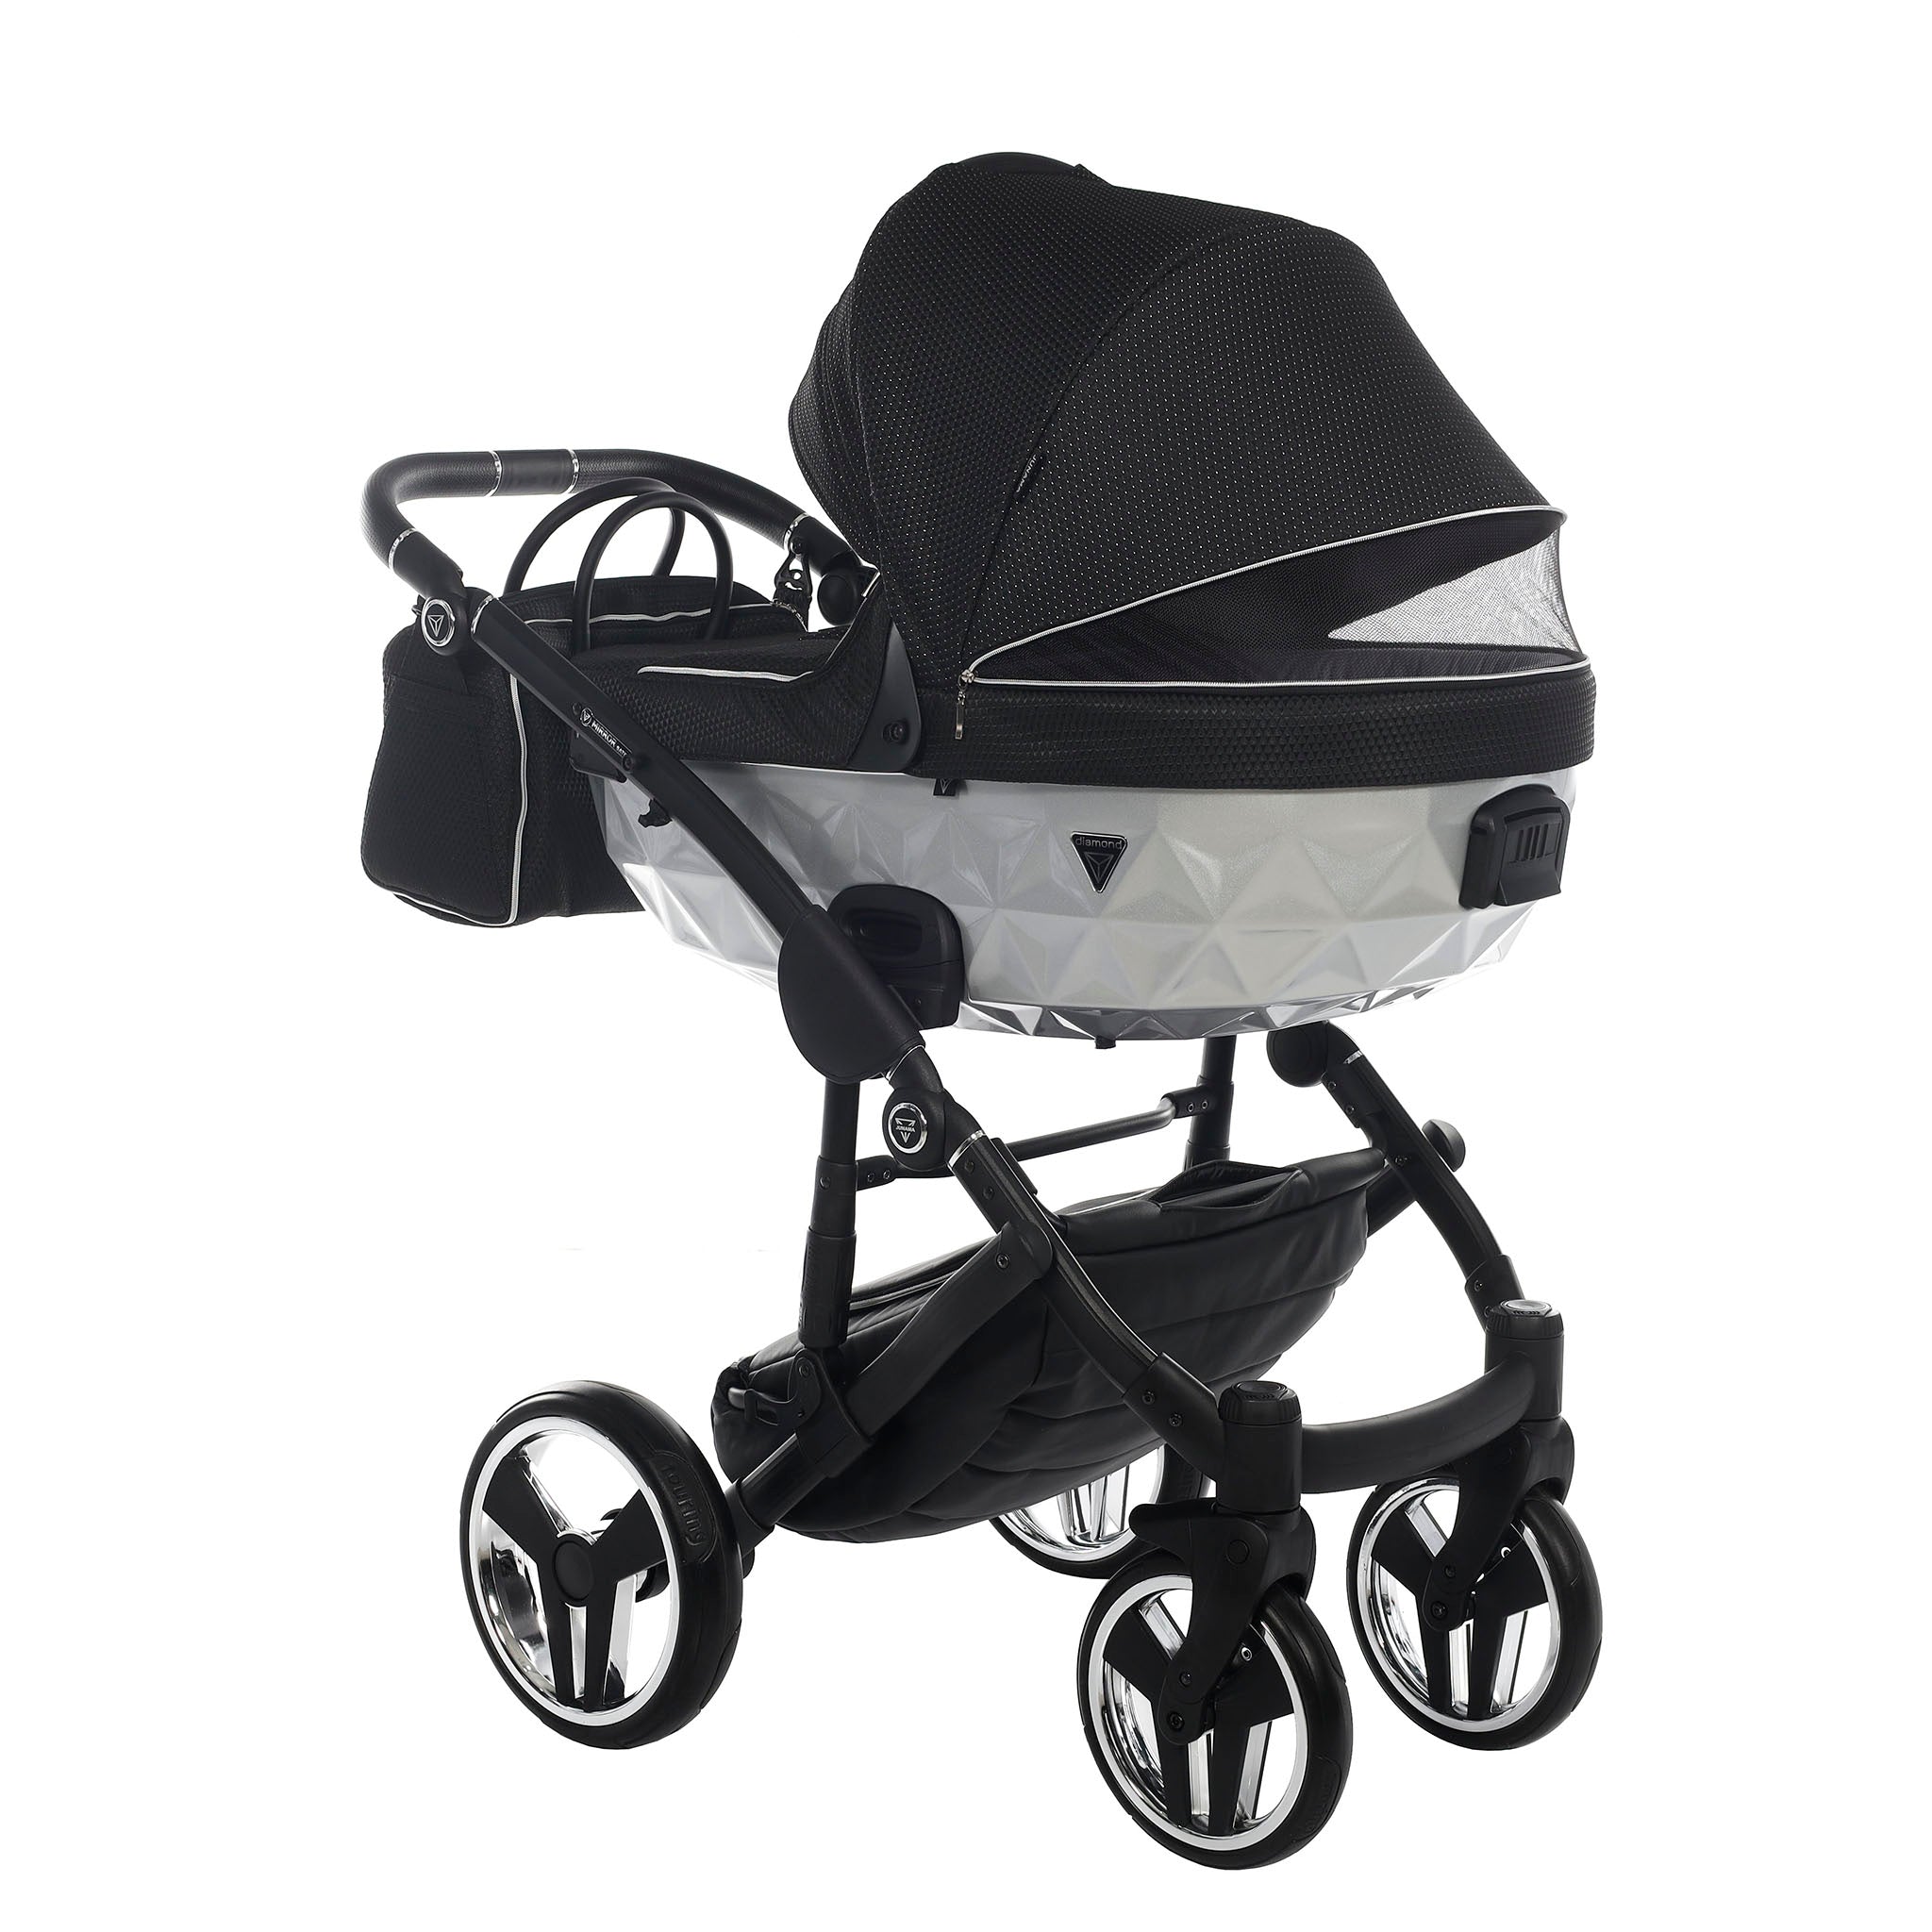 Junama Mirror Satin, baby prams or stroller 2 in 1 - Silver and Black, Code number: JUNMSAT01